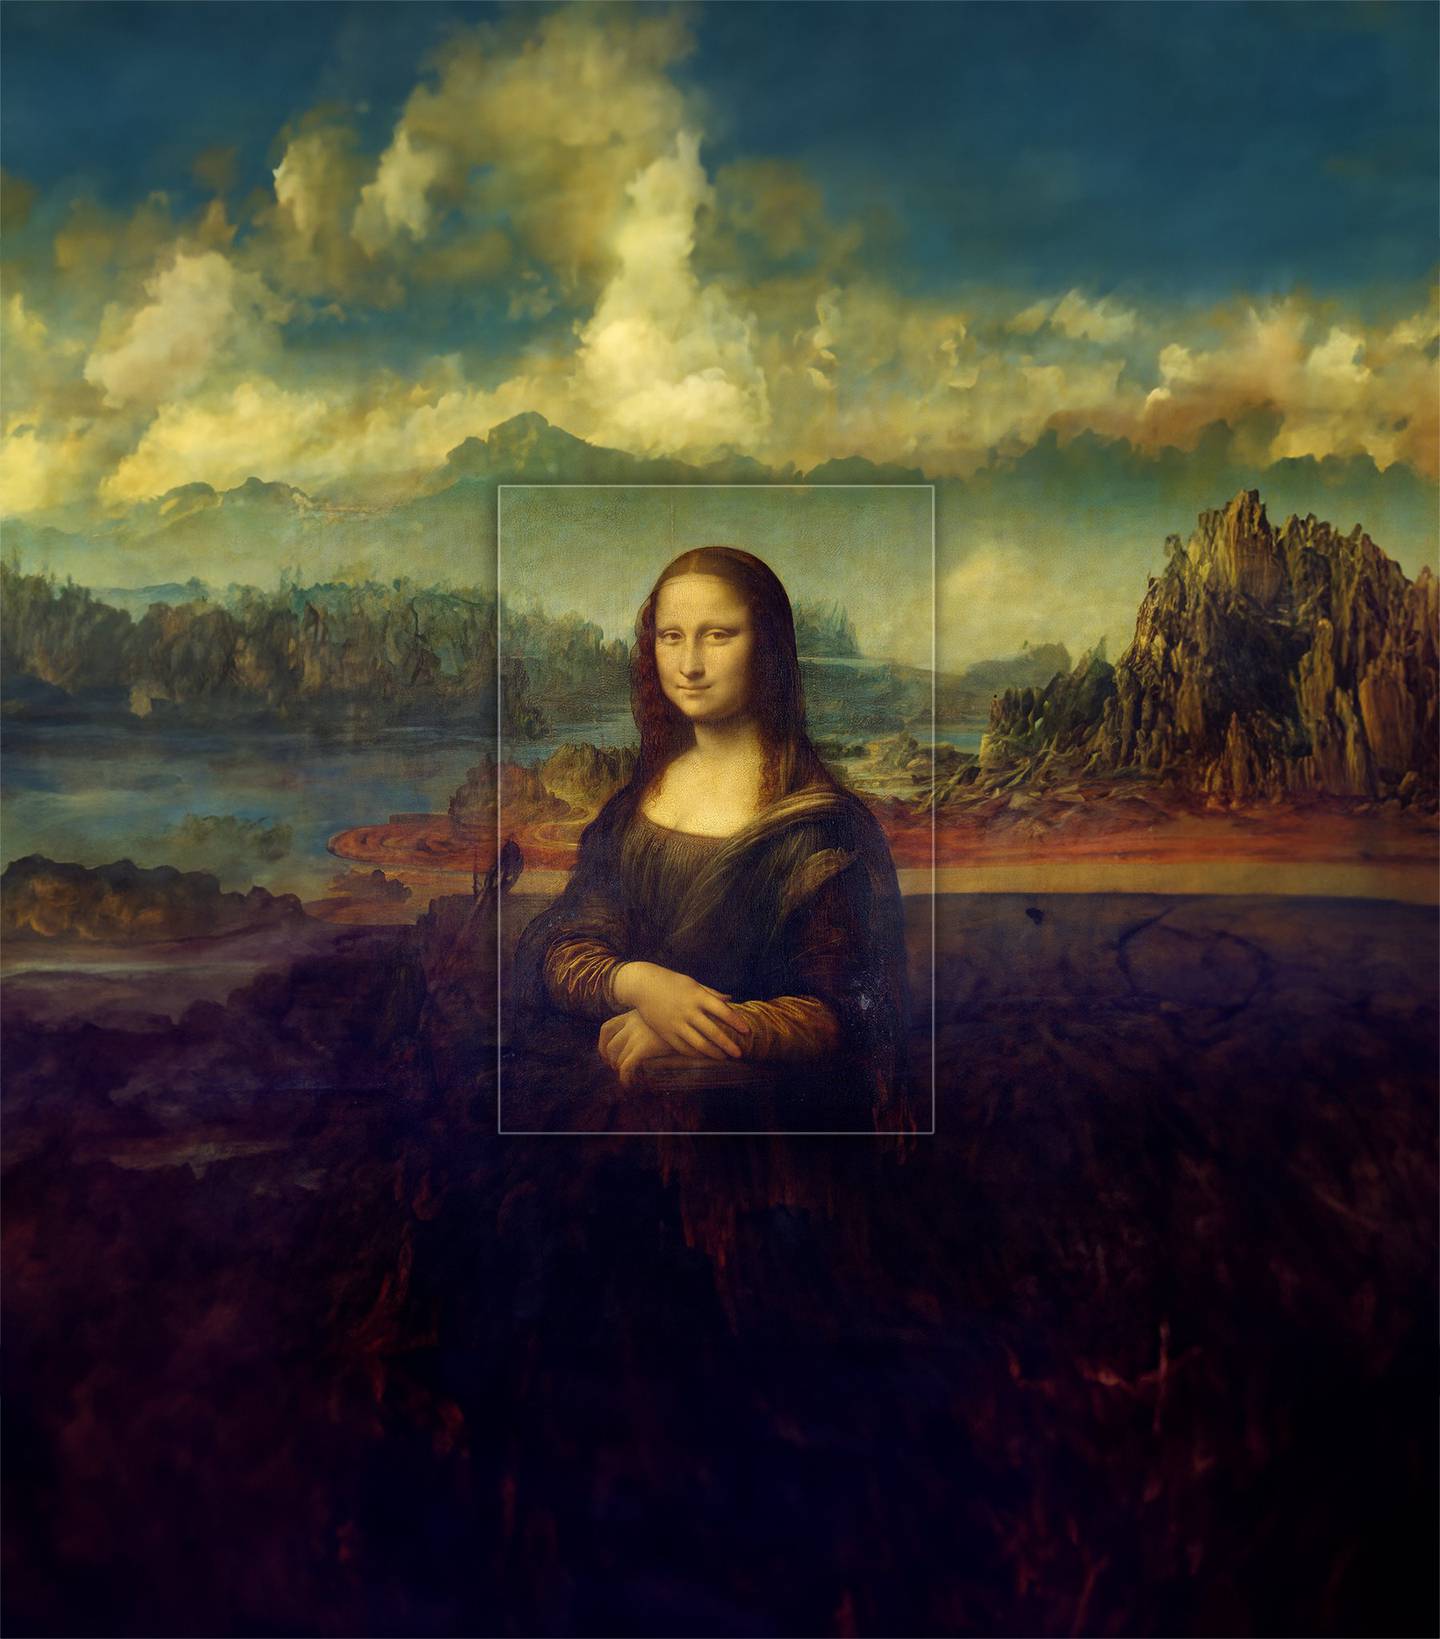 El paisaje expandido de la Mona Lisa